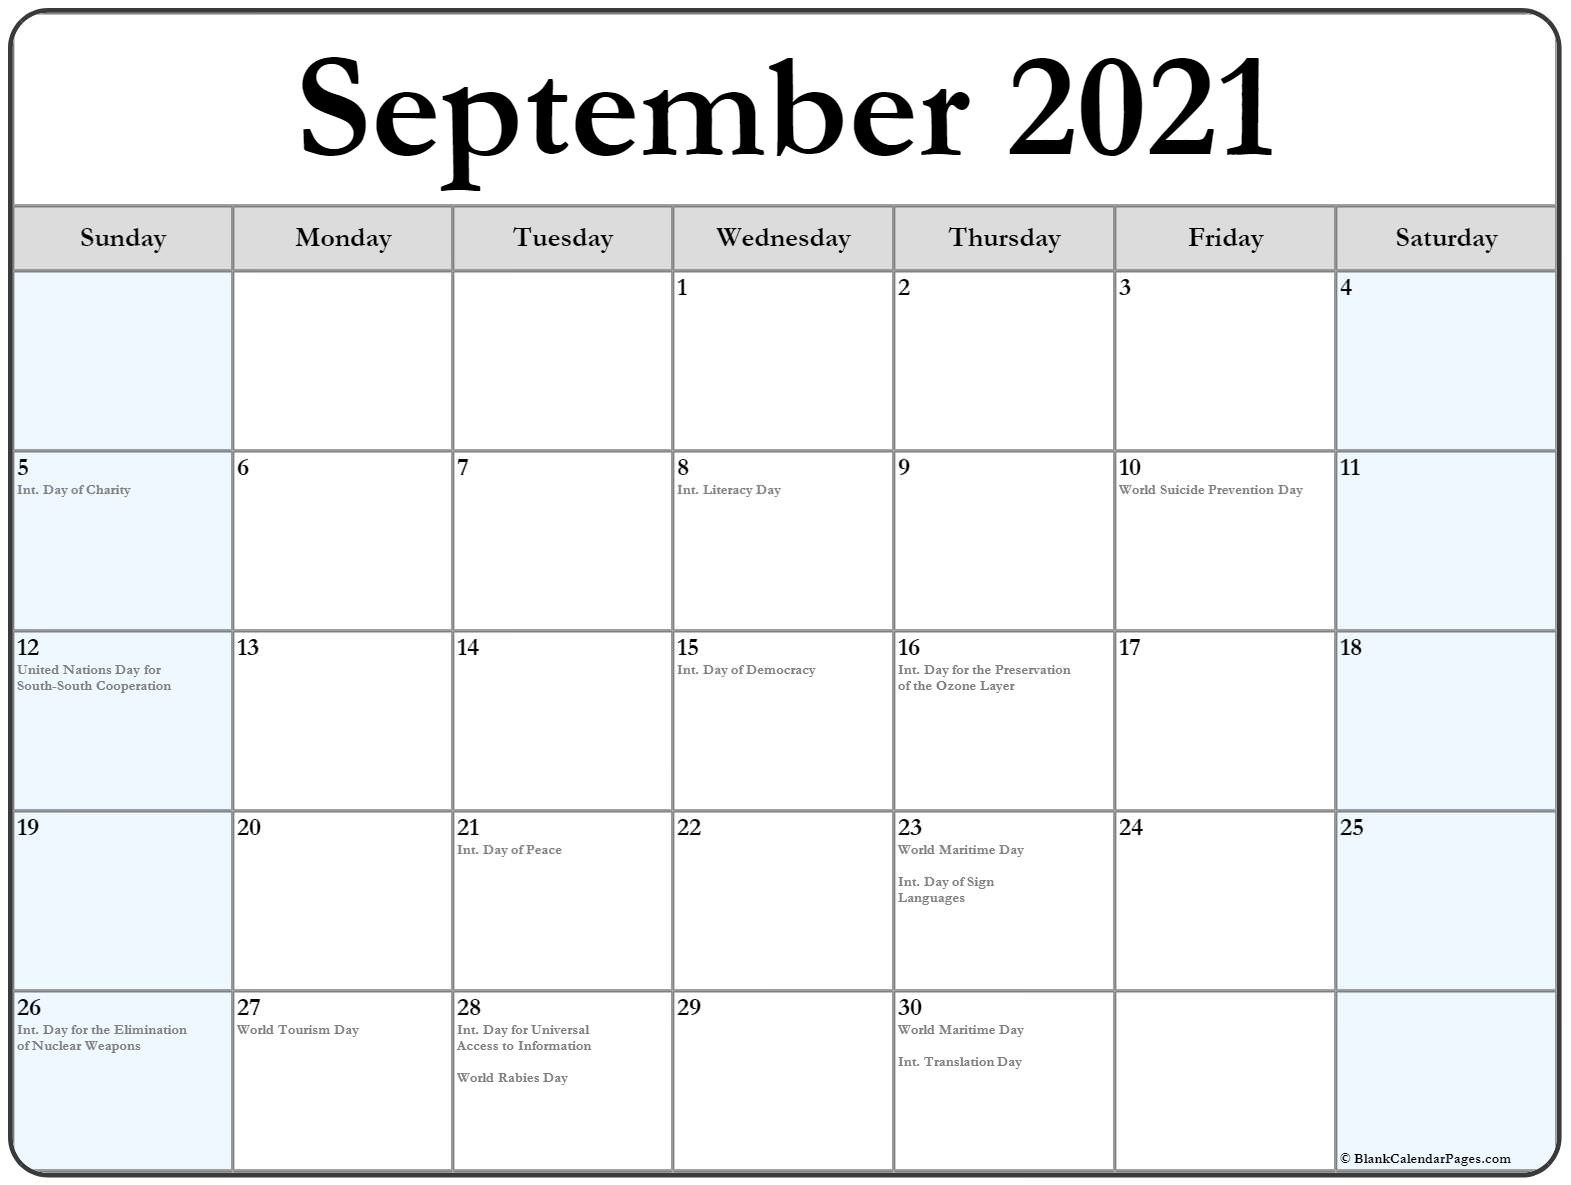 September 2021 calendar